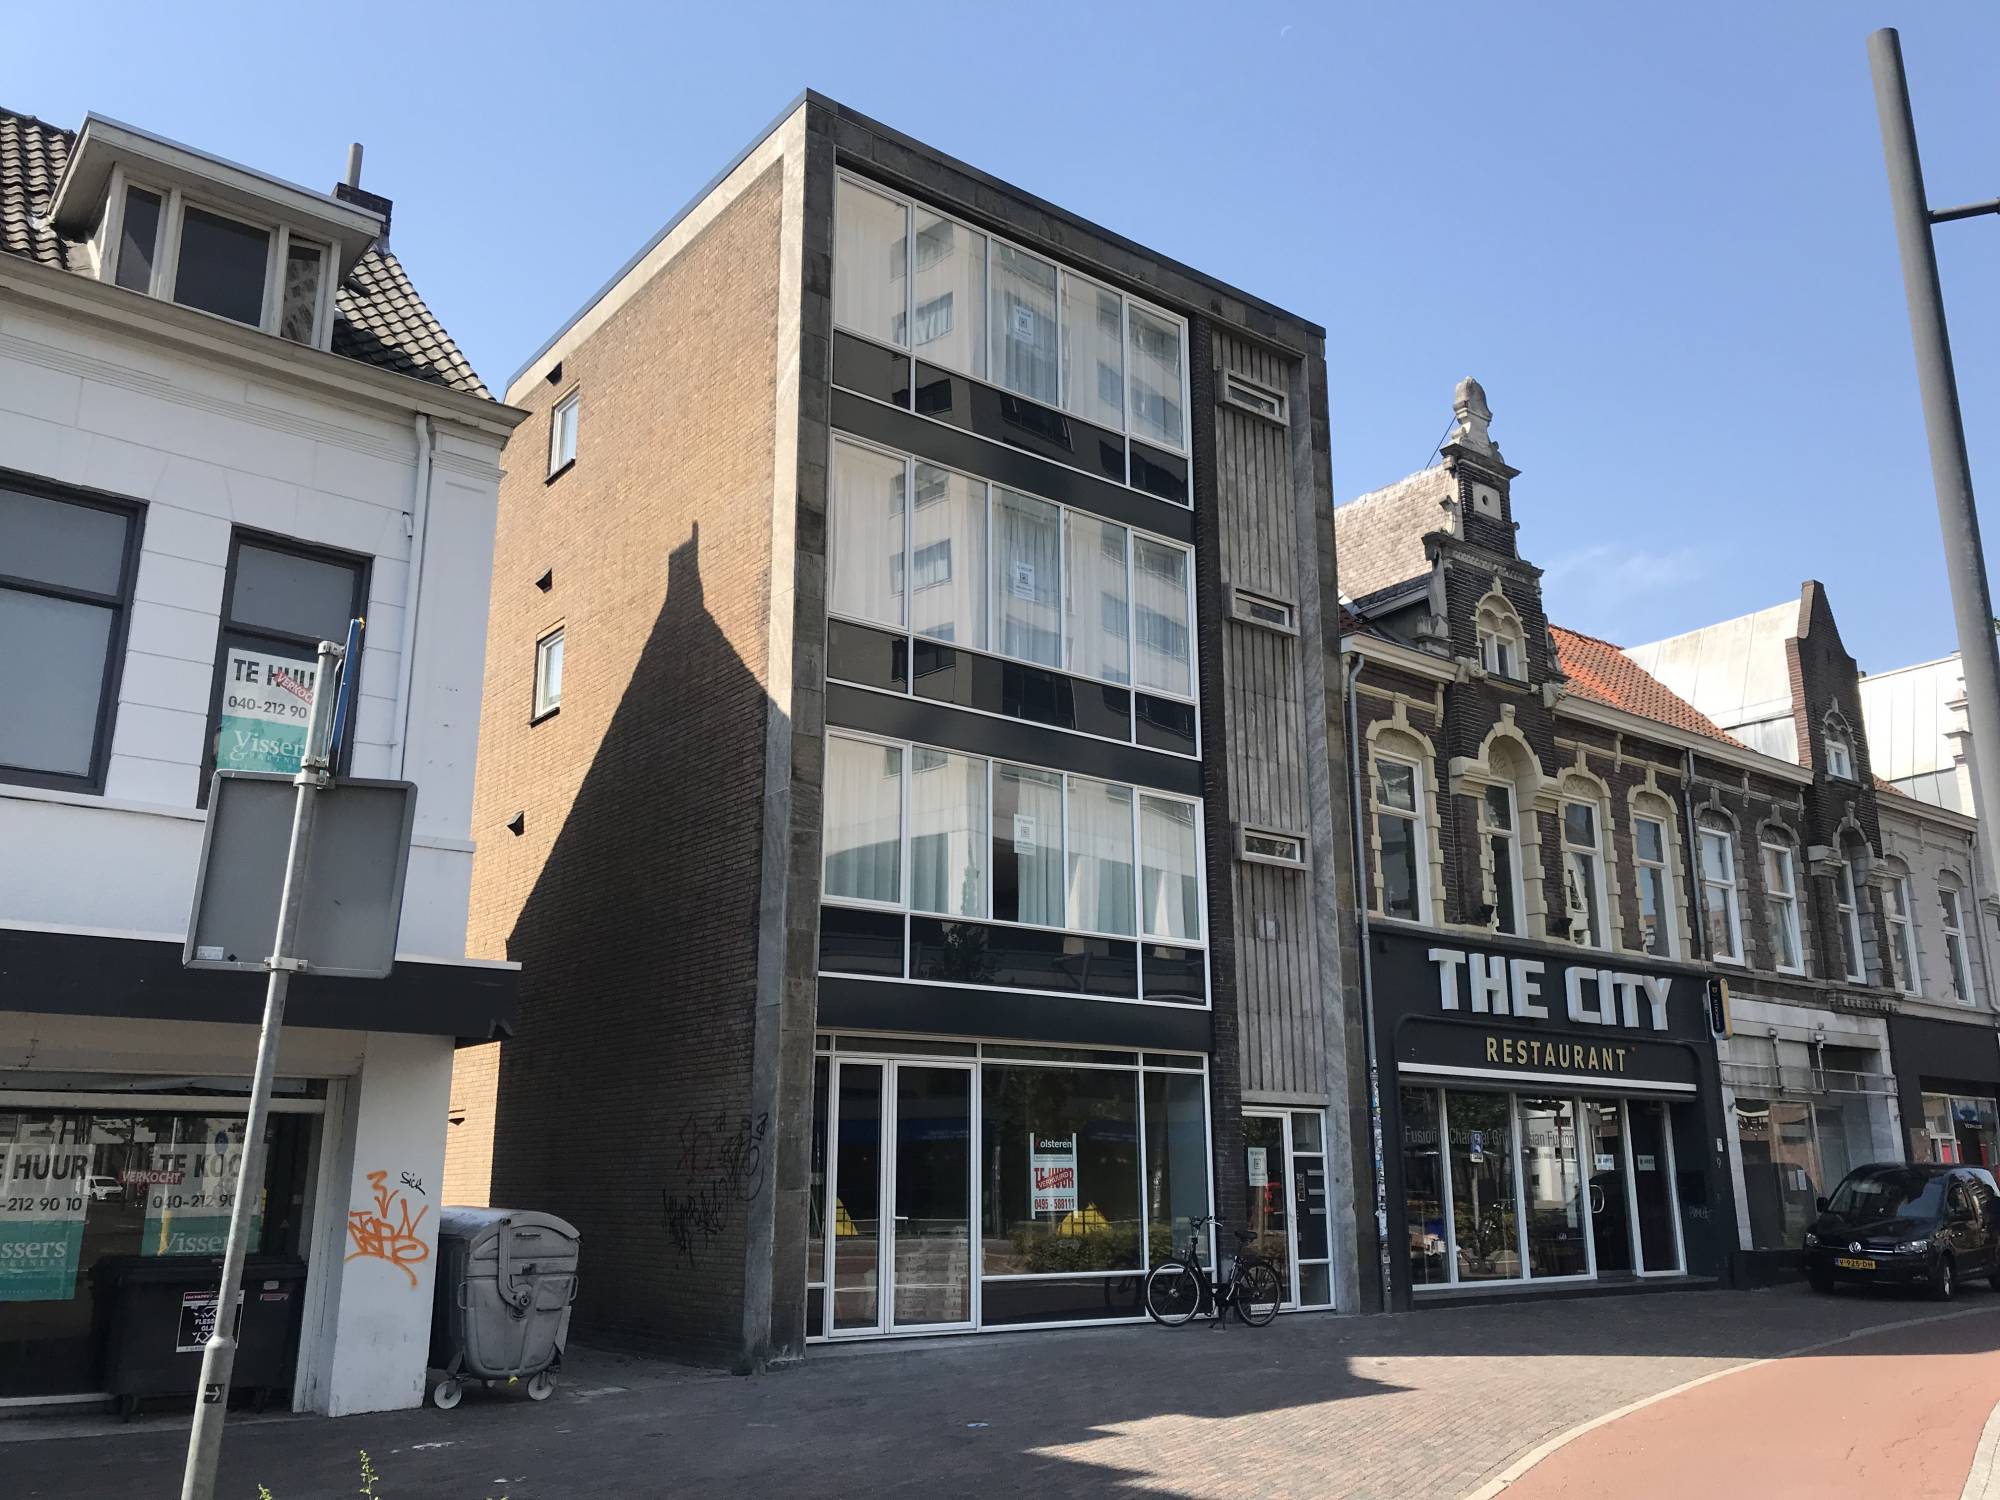 Woning in Eindhoven - Willemstraat